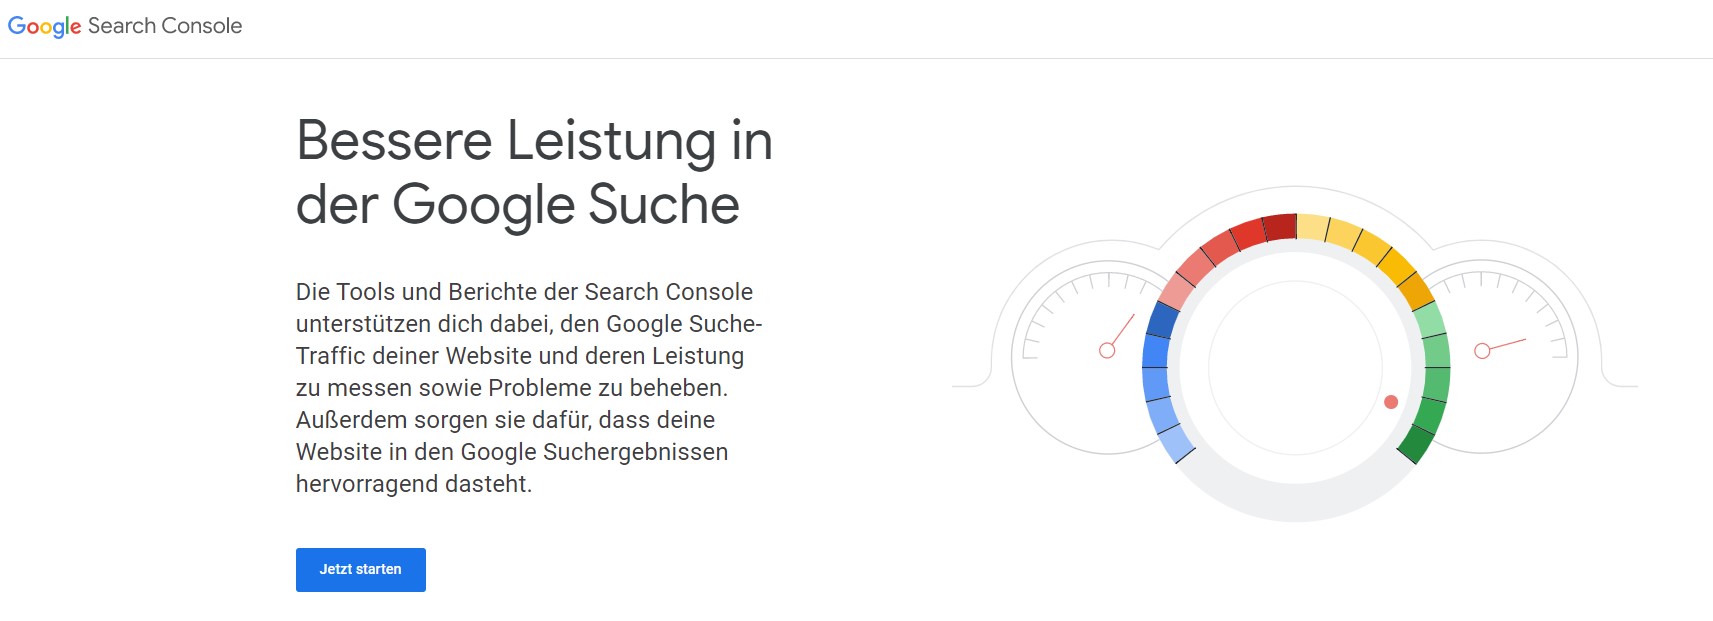 Keyword Recherche - Google Search Console